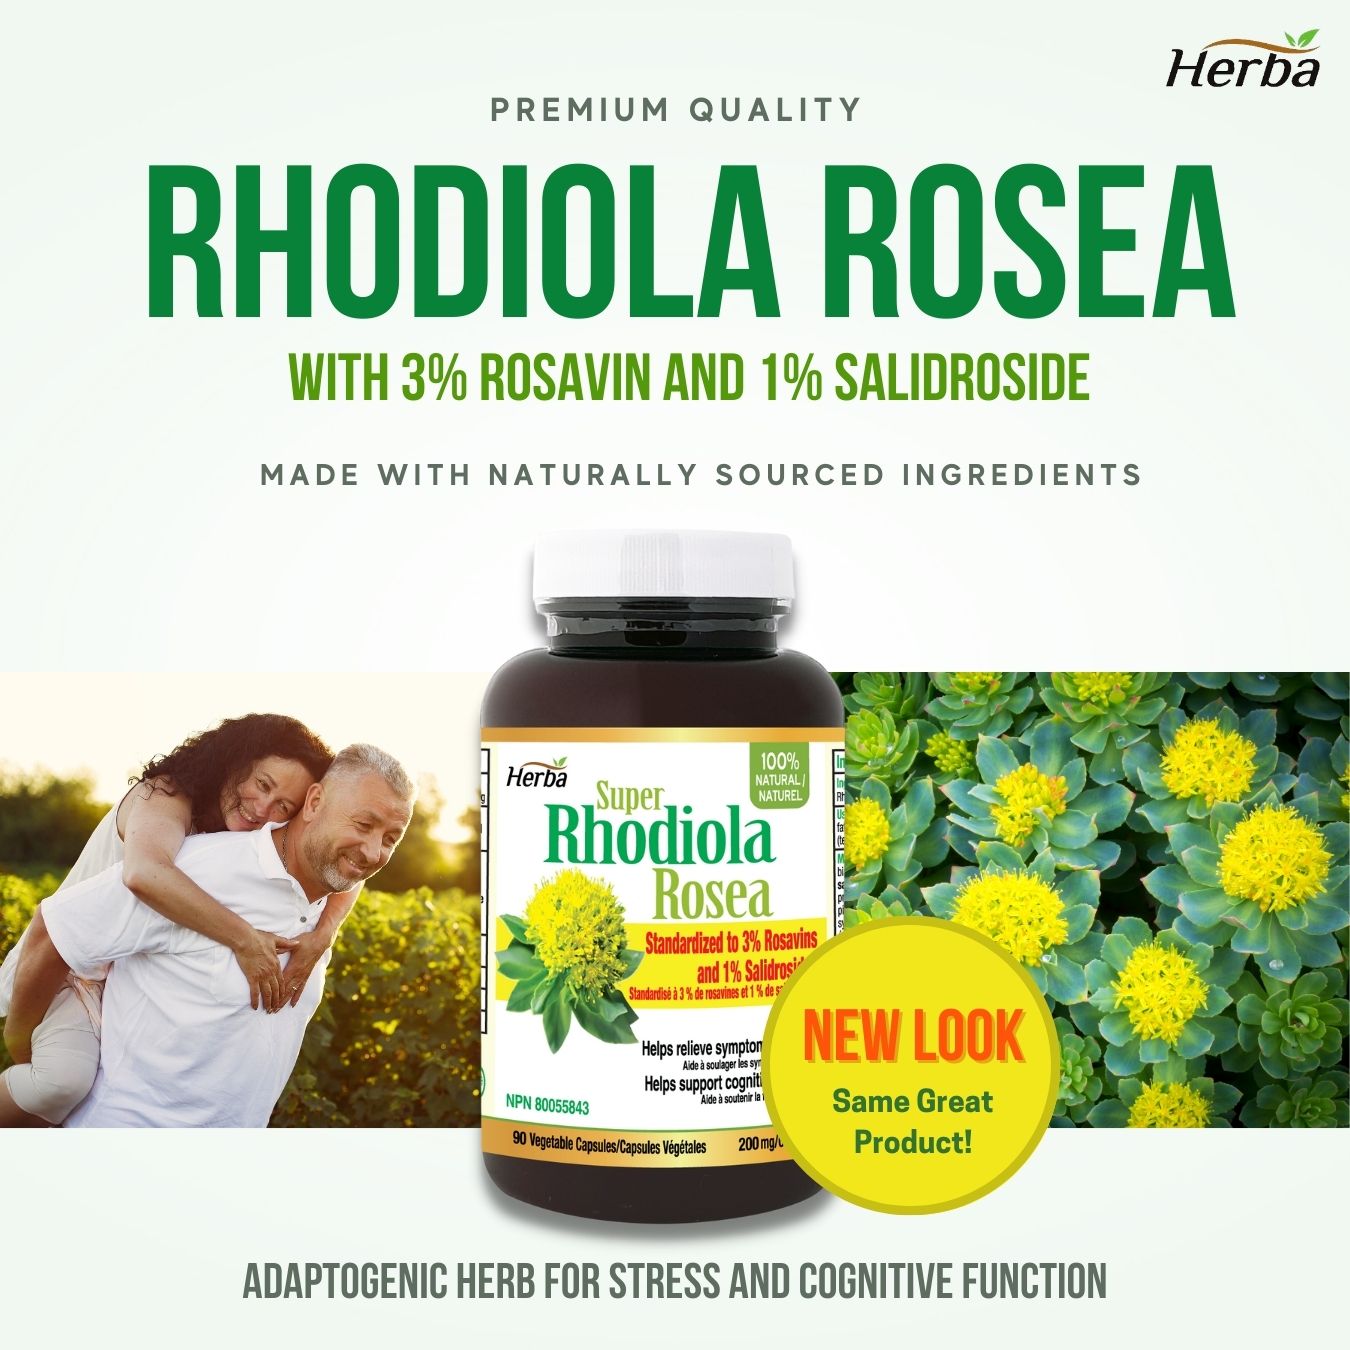 Herba Rhodiola Rosea Supplement 200mg - 90 Vegetable Capsules | 100% Natural Rhodiola Capsules – 3% Rosavins and 1% Salidrosides